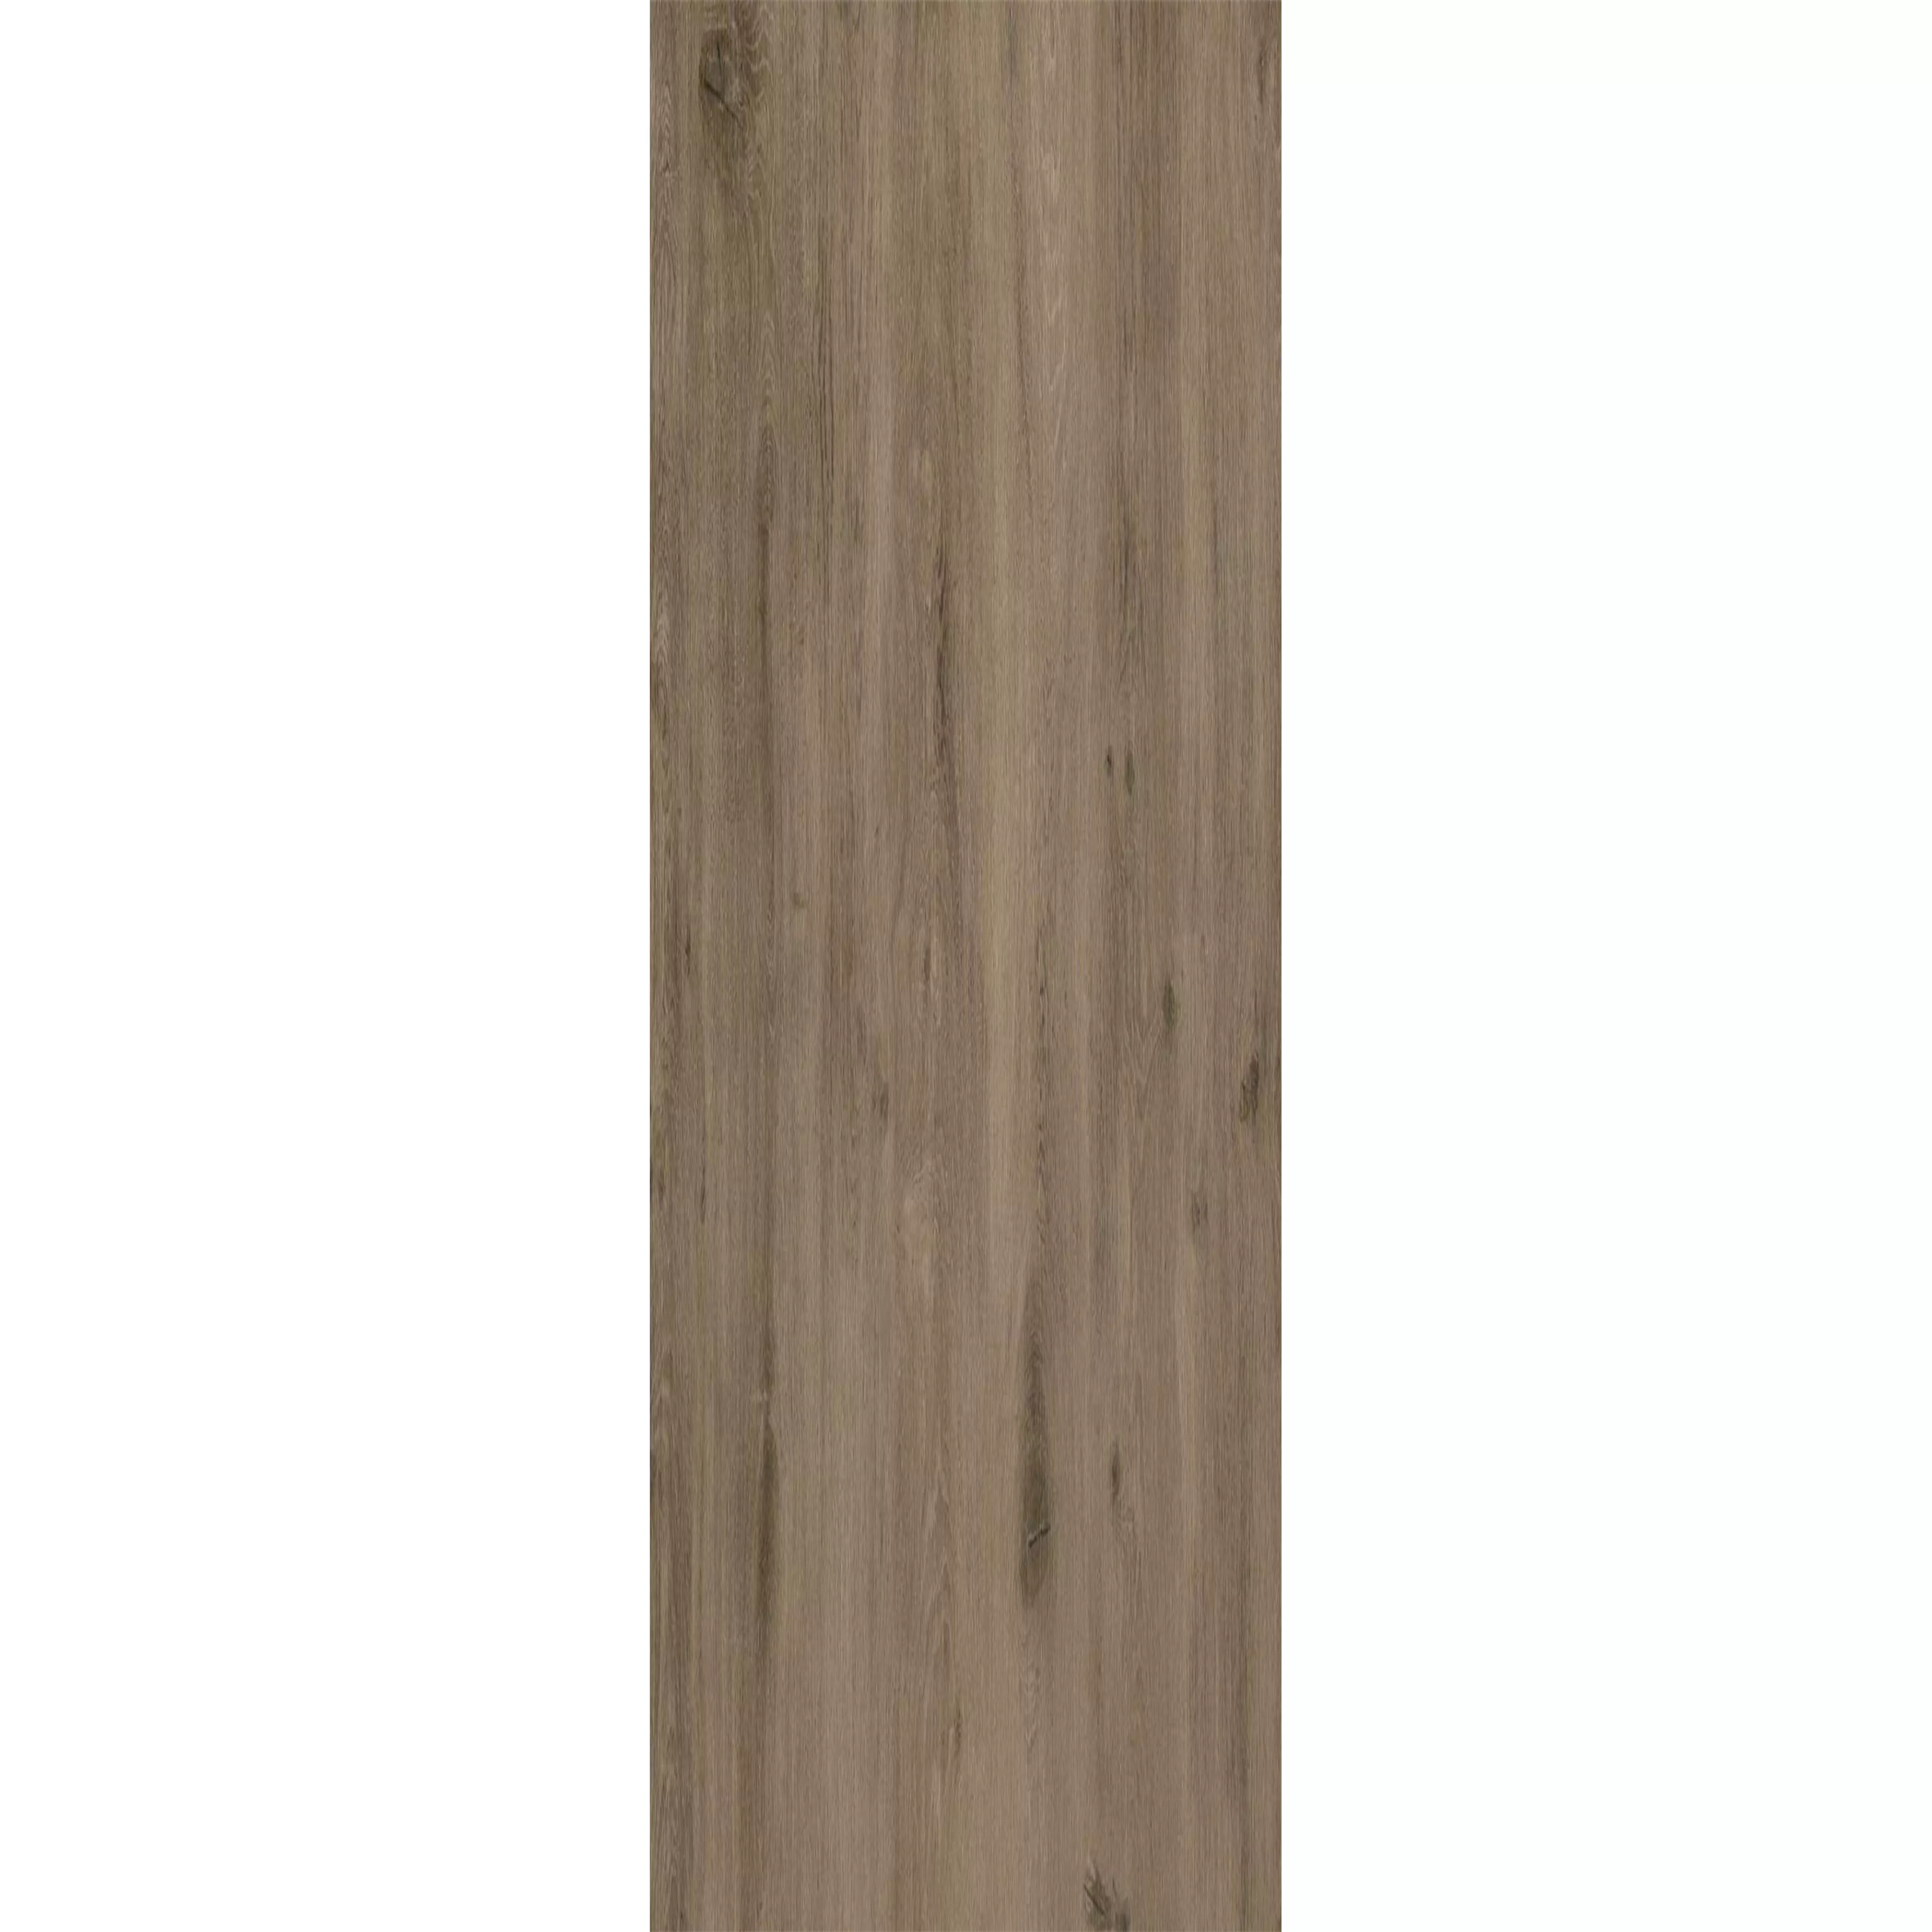 Vinylboden Klicksystem Woodland Braun Grau 17,2x121cm